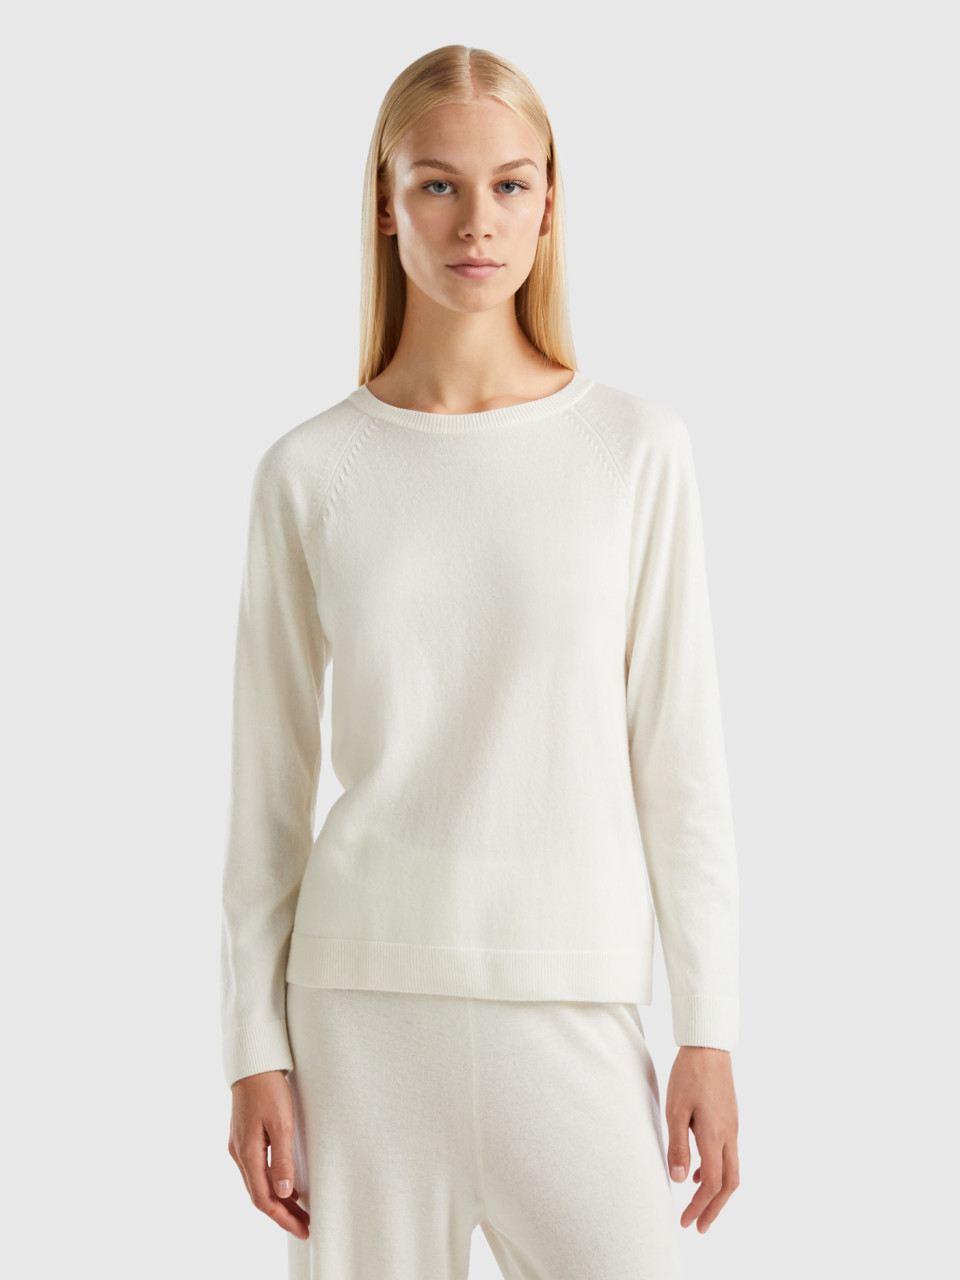 Benetton, Cream Crew Neck Sweater In Cashmere And Wool Blend, Creamy White, Women